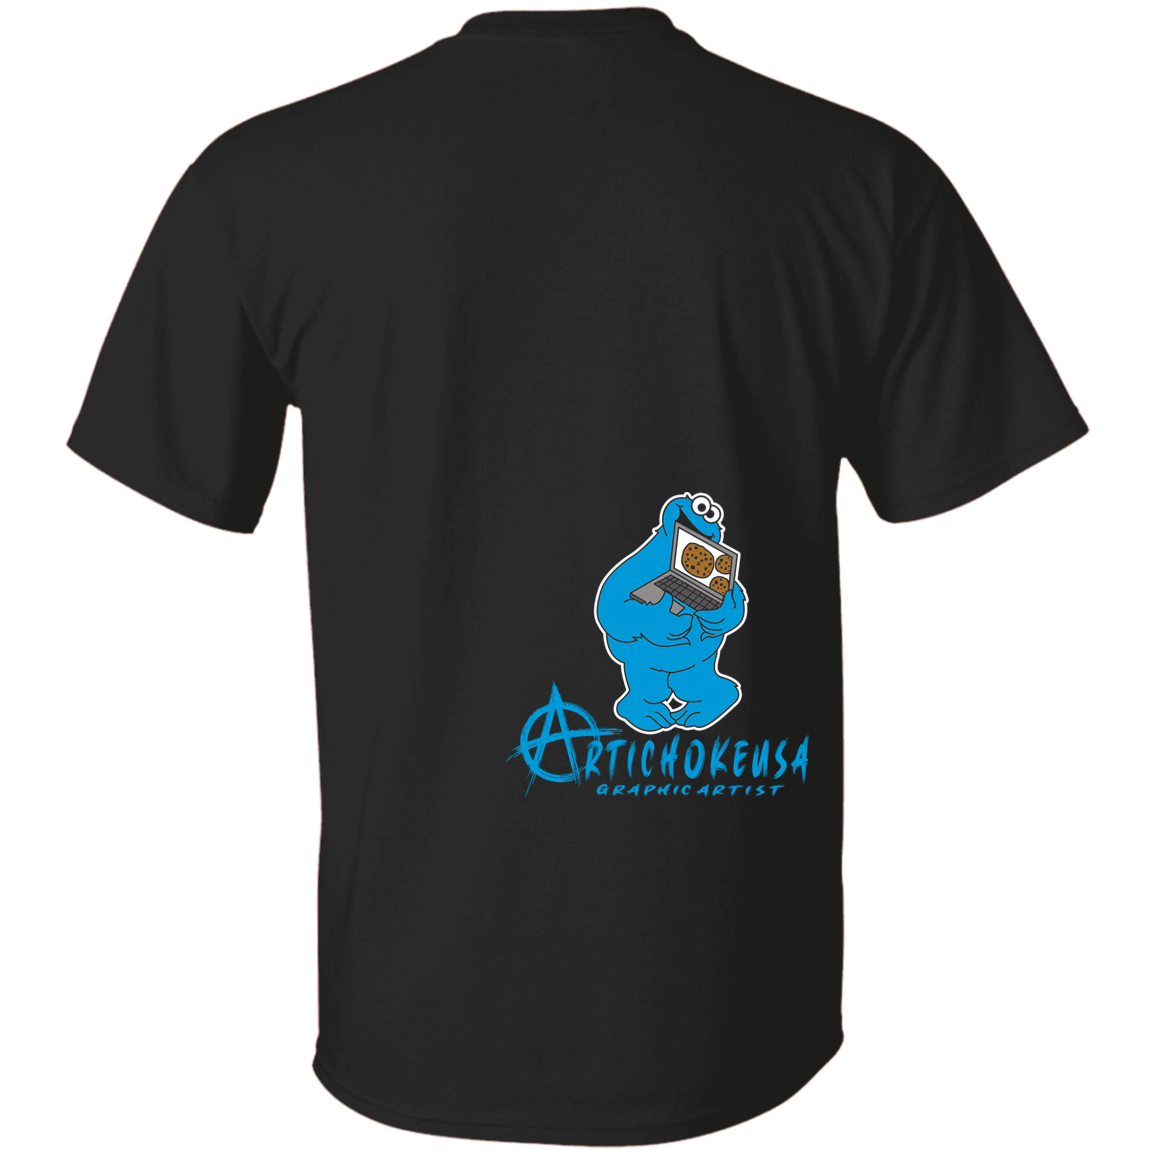 ArtichokeUSA Custom Design #55. DelEATing Cookes. IT humor. Cookie Monster Parody. Basic 100% Cotton T-Shirt